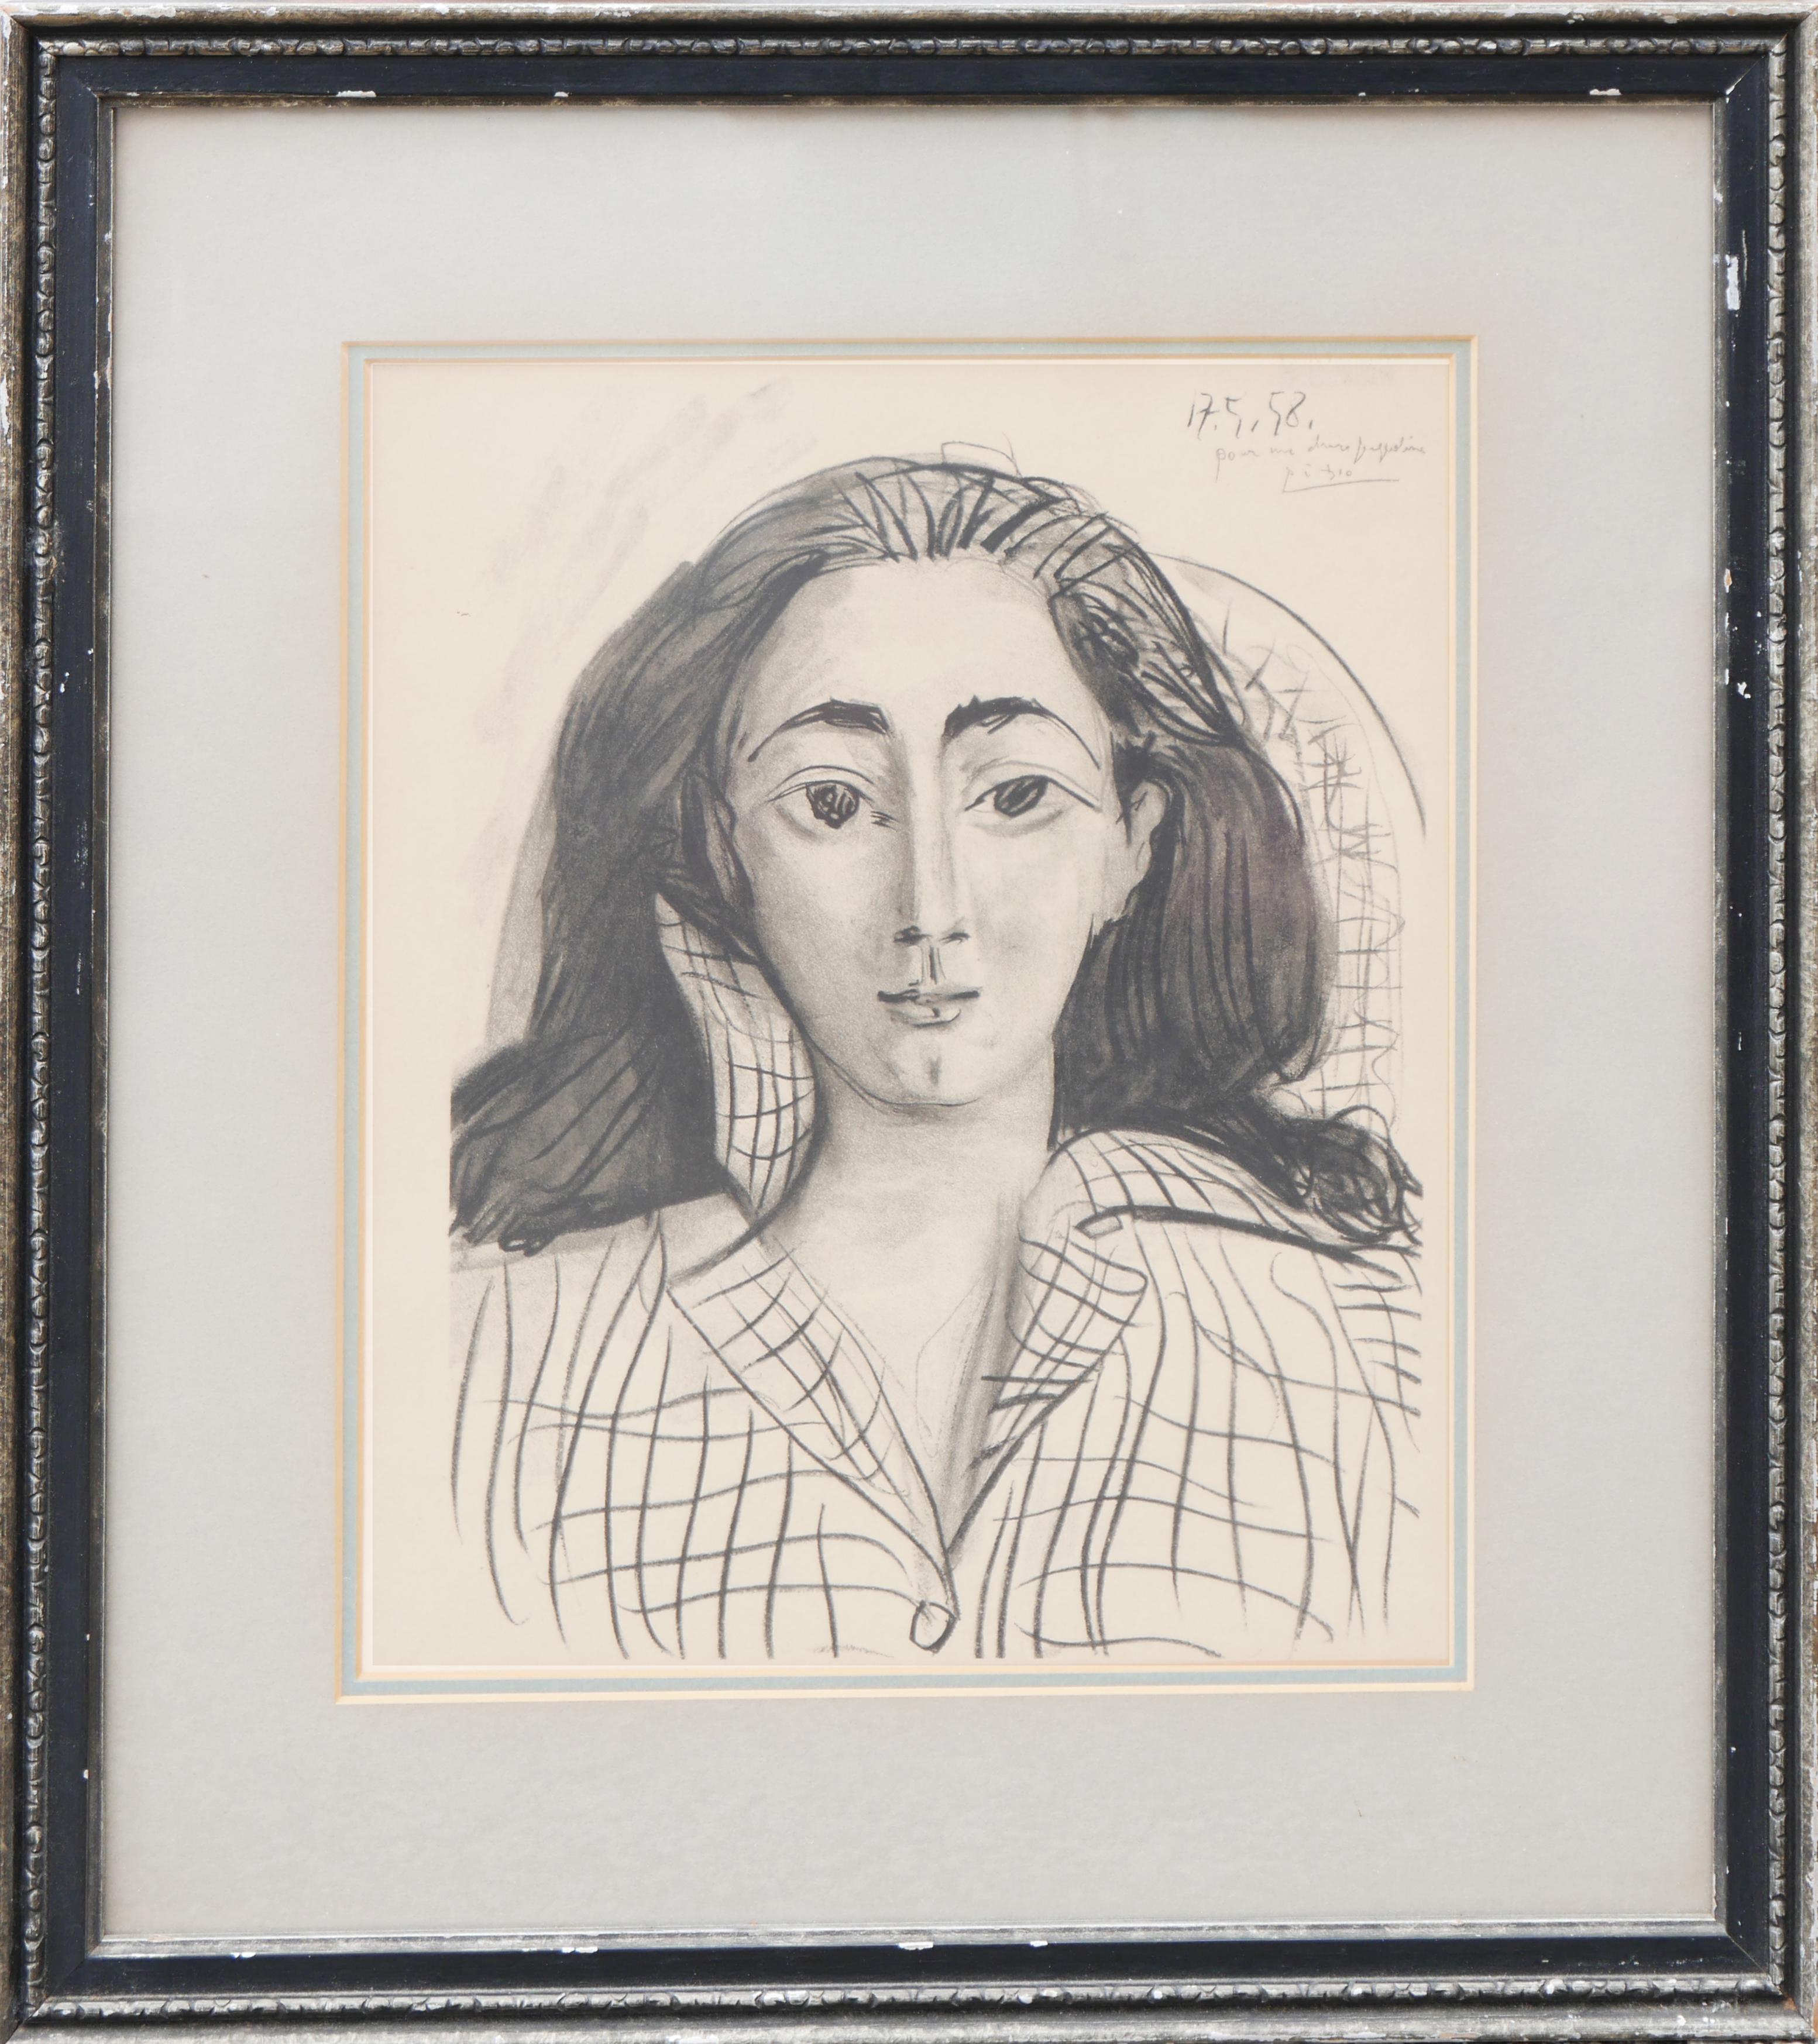 Pablo Picasso Portrait Print - "Portrait of Jacqueline" Modern Abstract Black & White Figurative Drawing Print